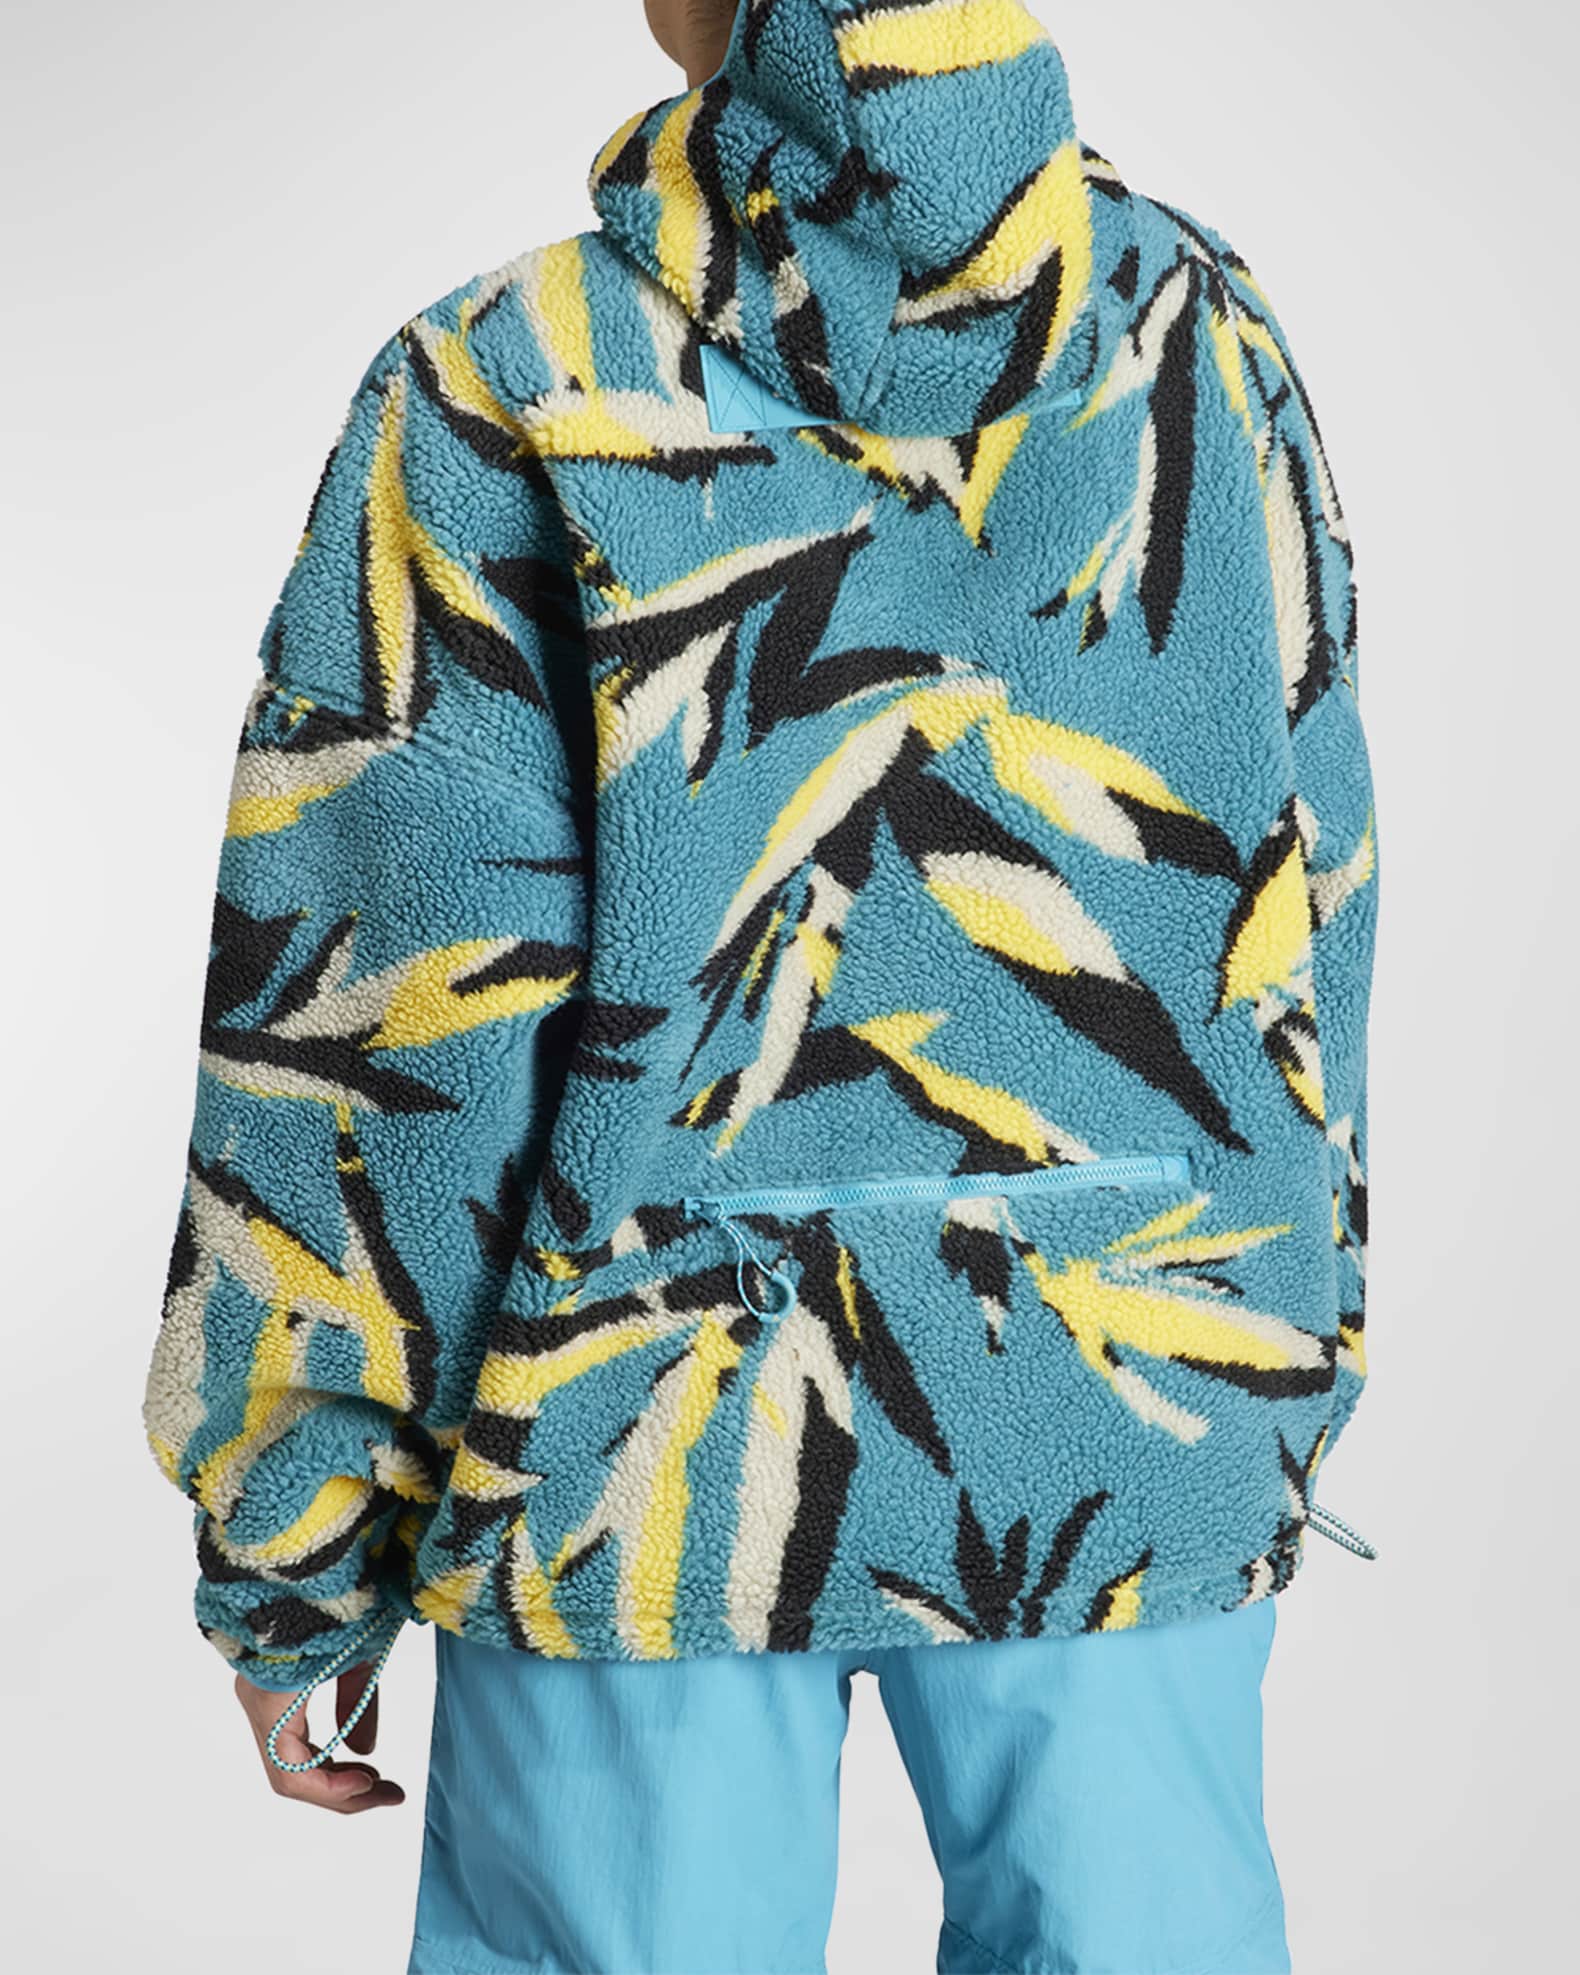 Adidas by Stella McCartney Jacquard Fleece Jacket